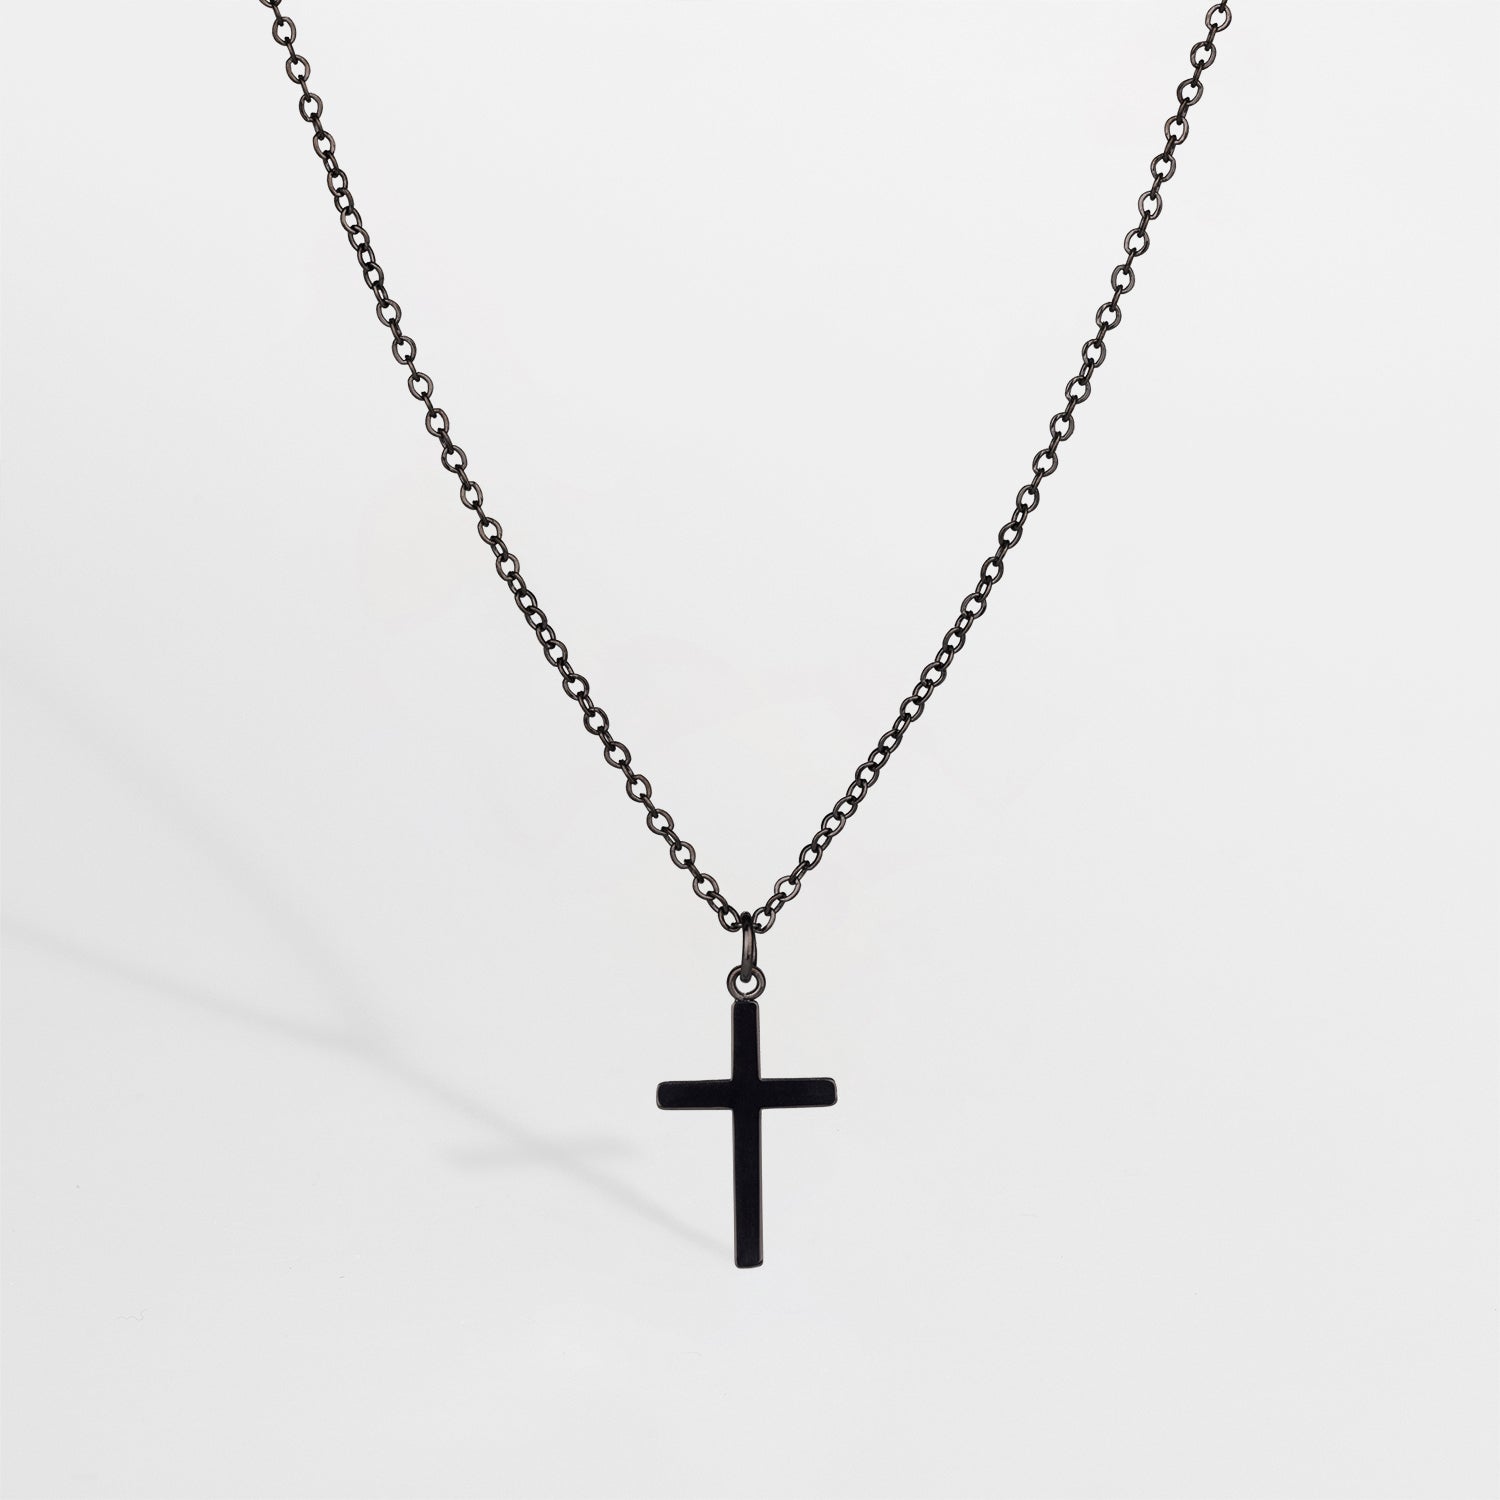 NL Cross Chain - Black